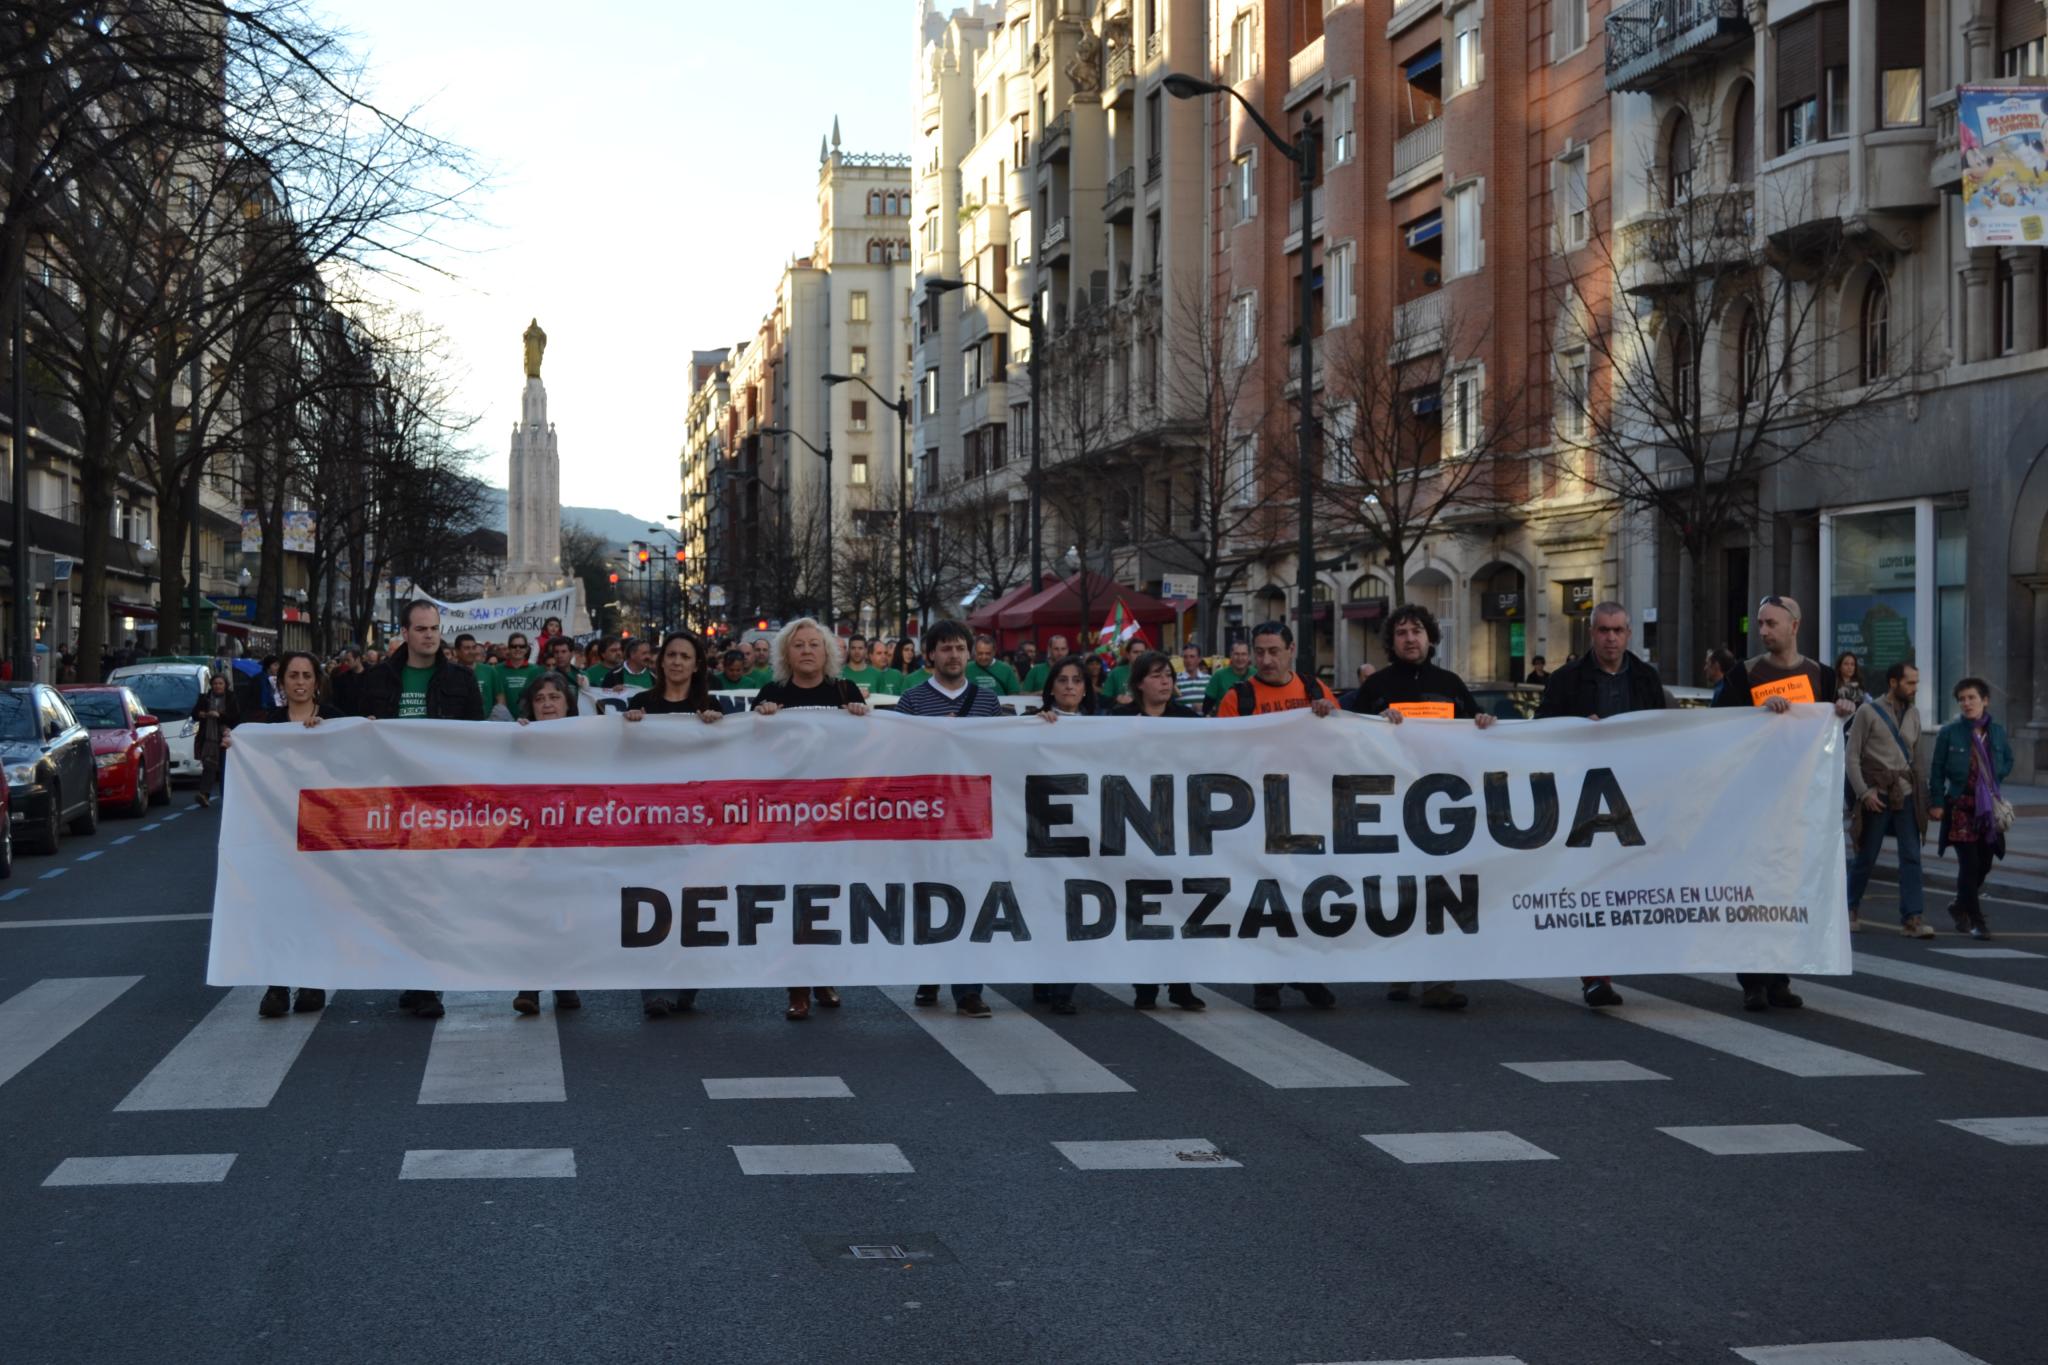 a banner that says enrilgua degenda deagn on a city street